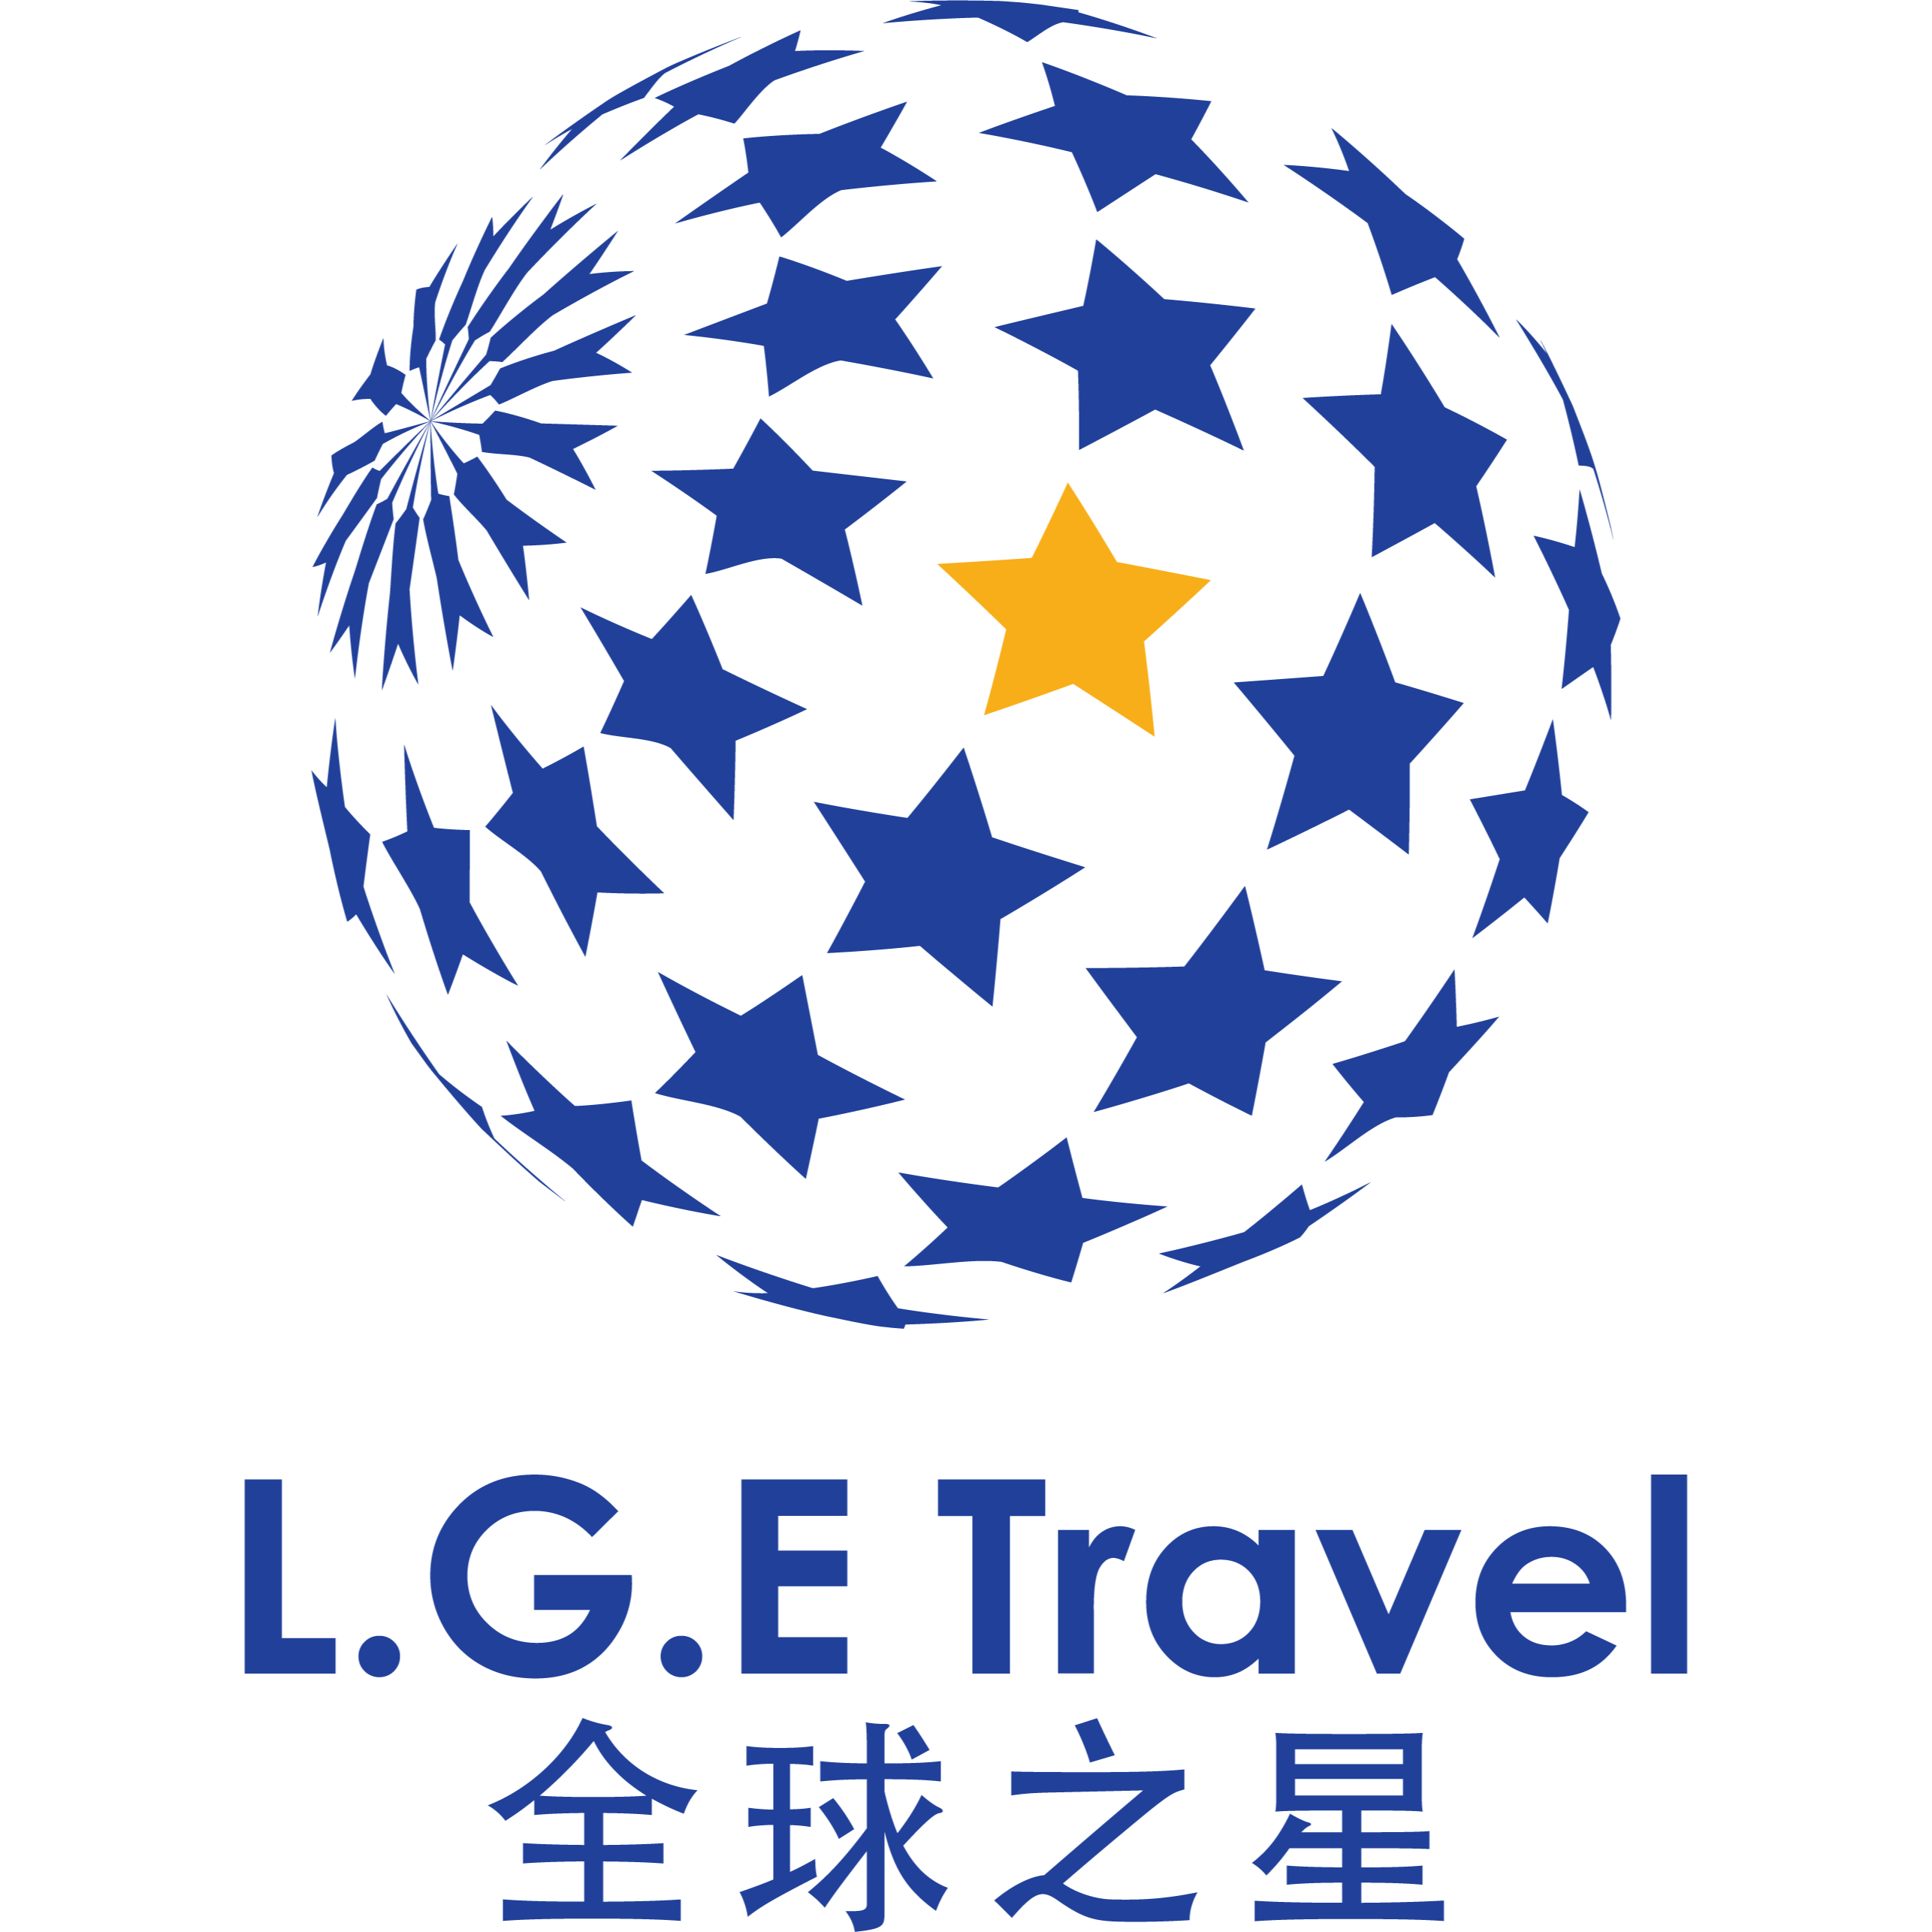 LGE Travel logo